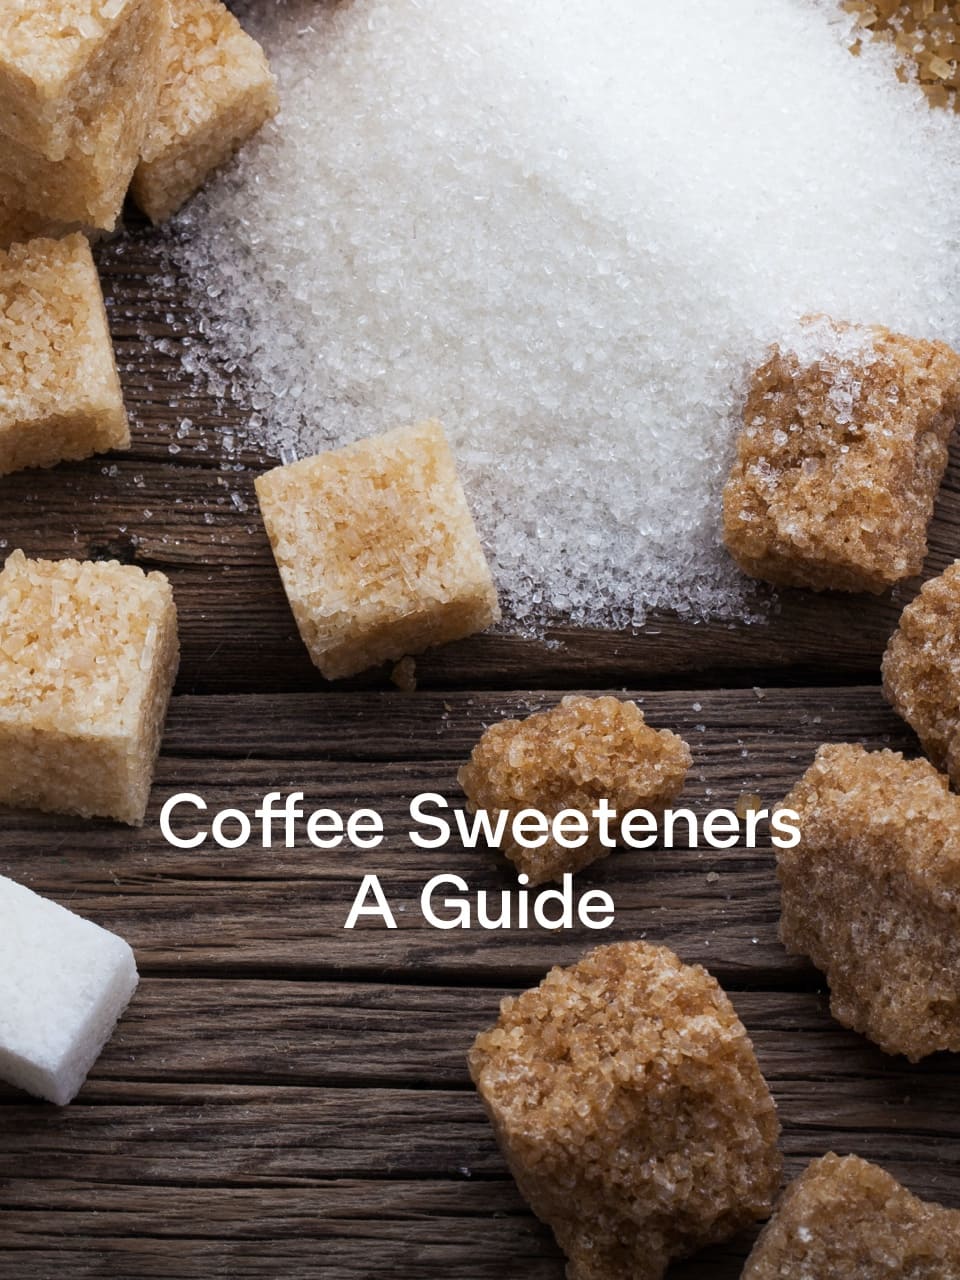 A guide for Coffee Sweeteners - Coffee Lounge